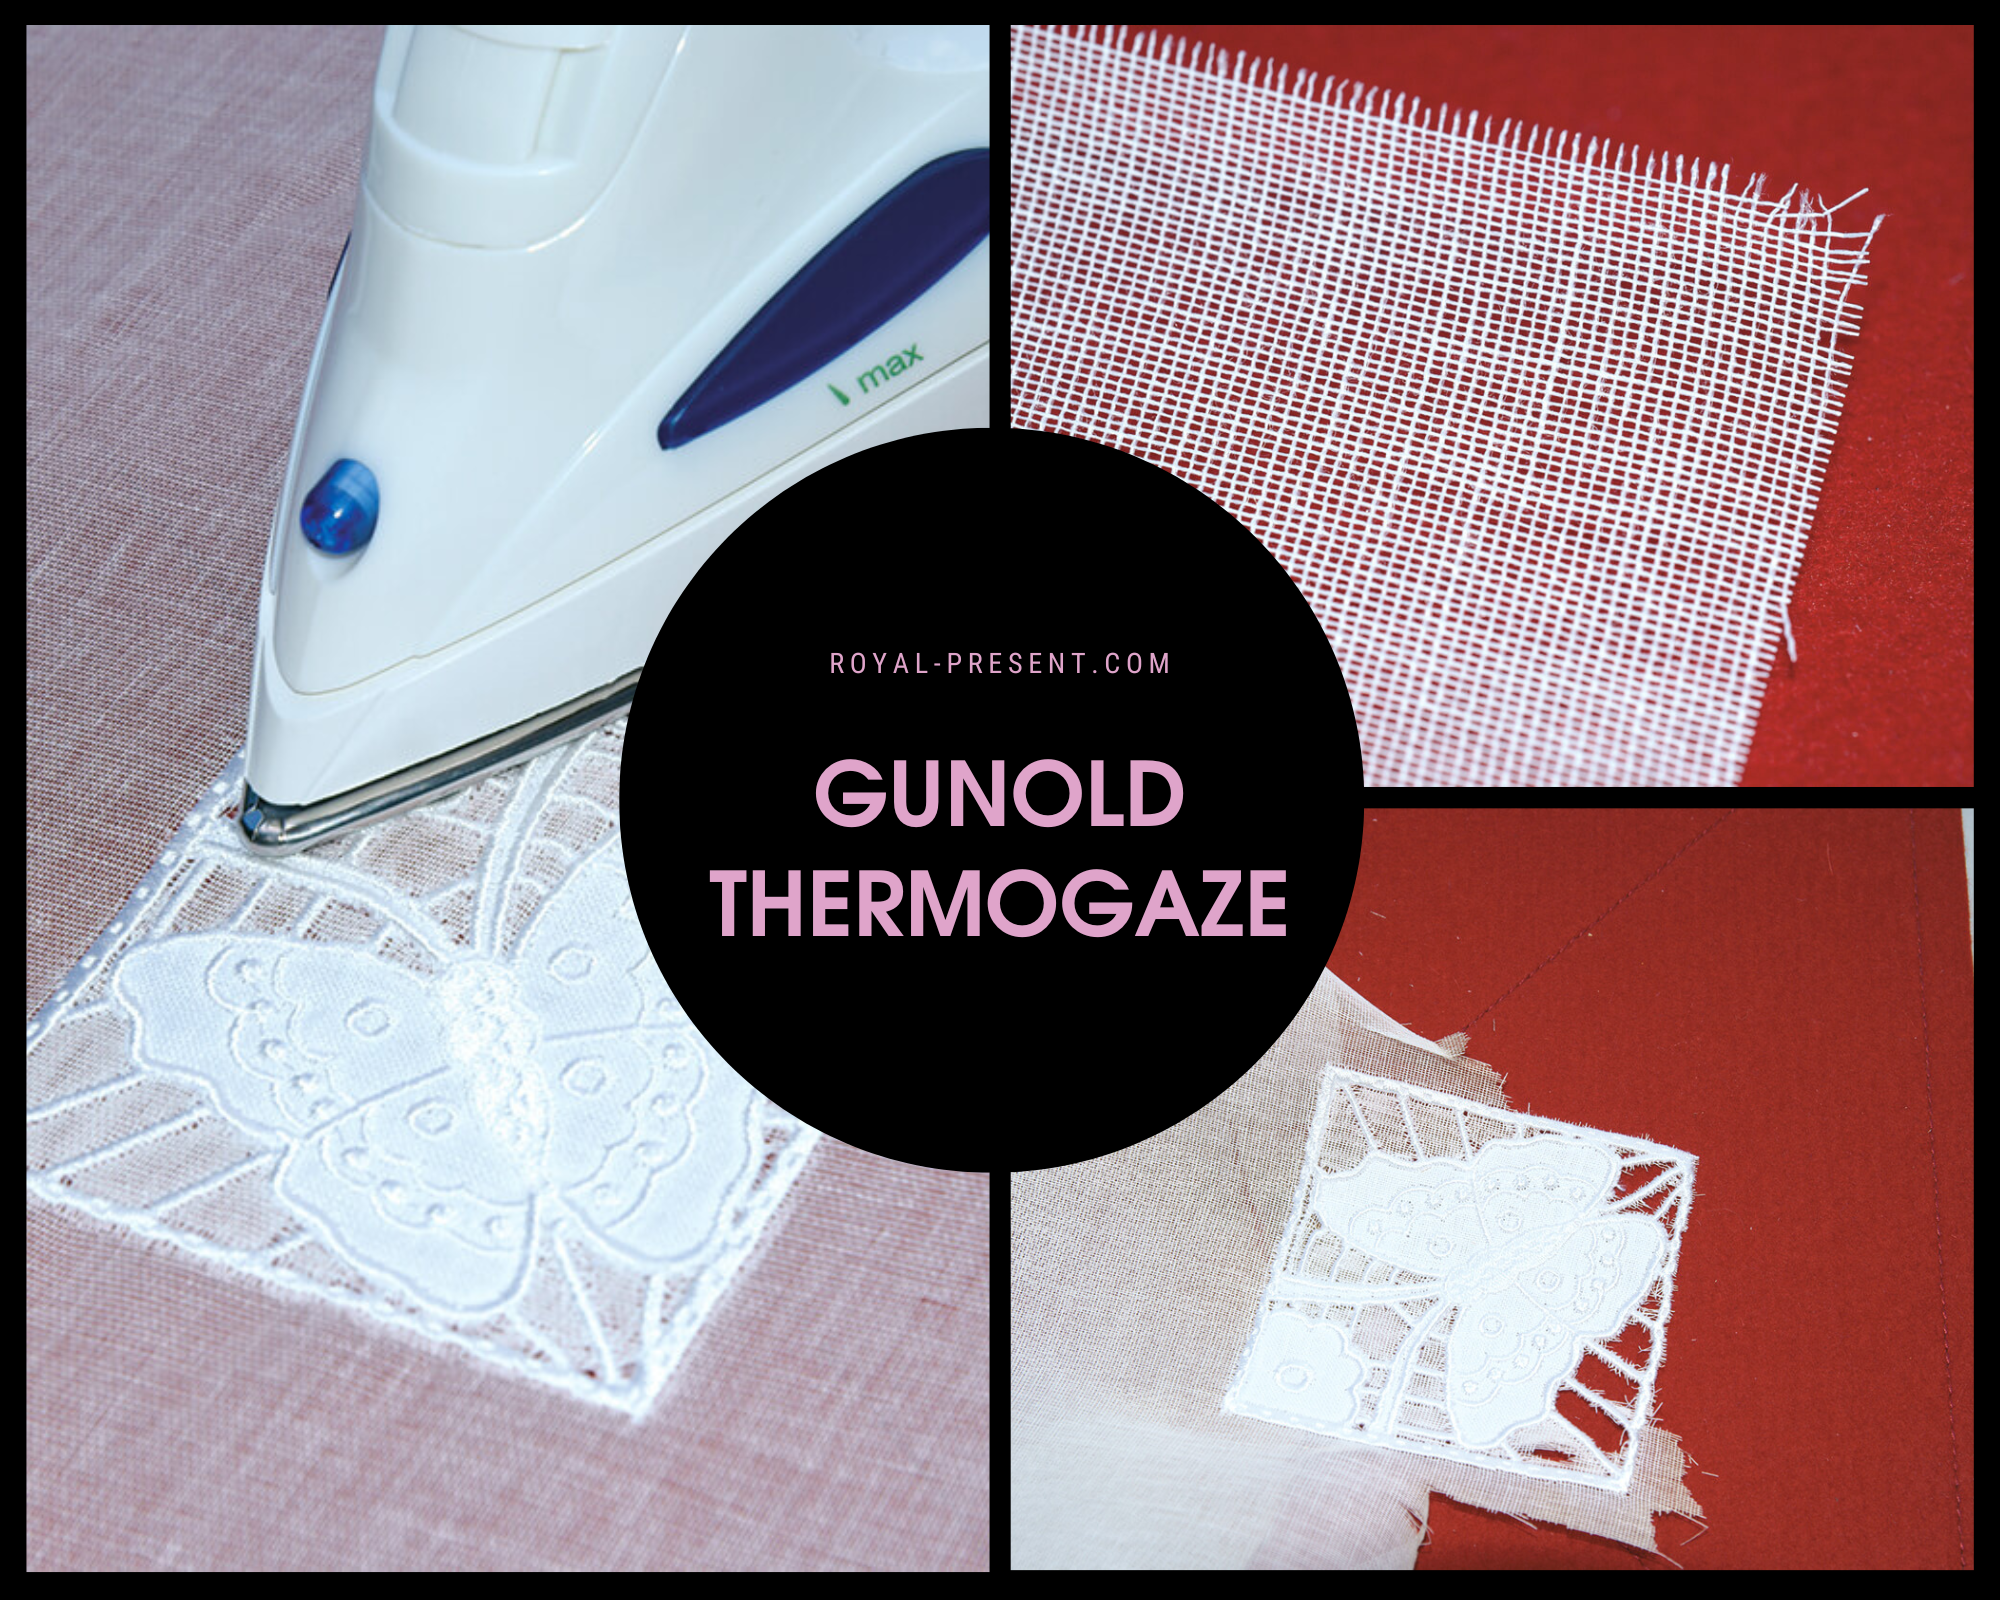 Gunold's Thermogaze: A Perfect Match